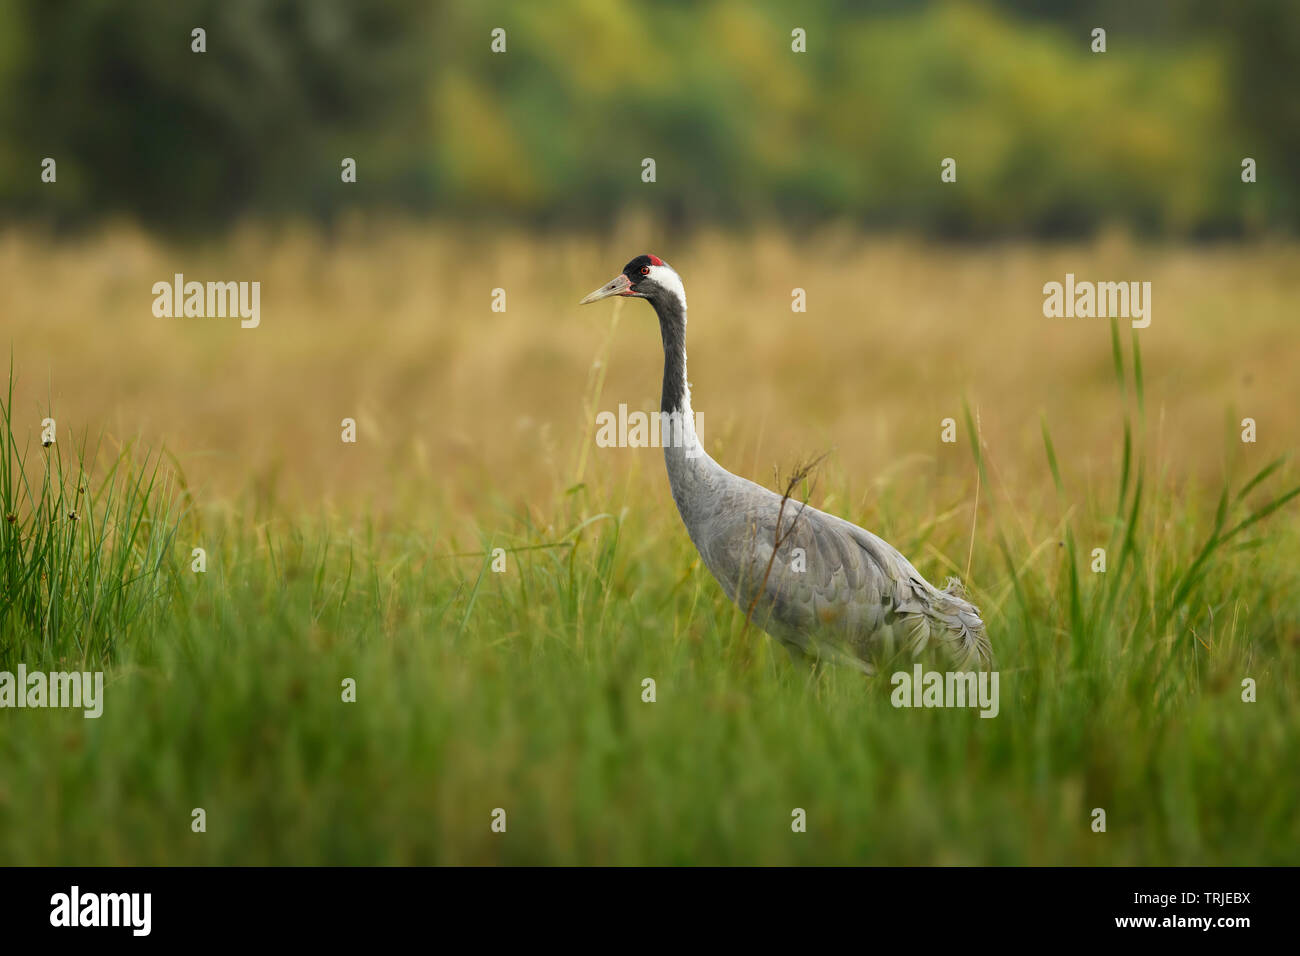 Common Crane - Grus grus, beautiful large bird from Euroasian fields and meadows, Hortobagy National Park, Hungary. Stock Photo